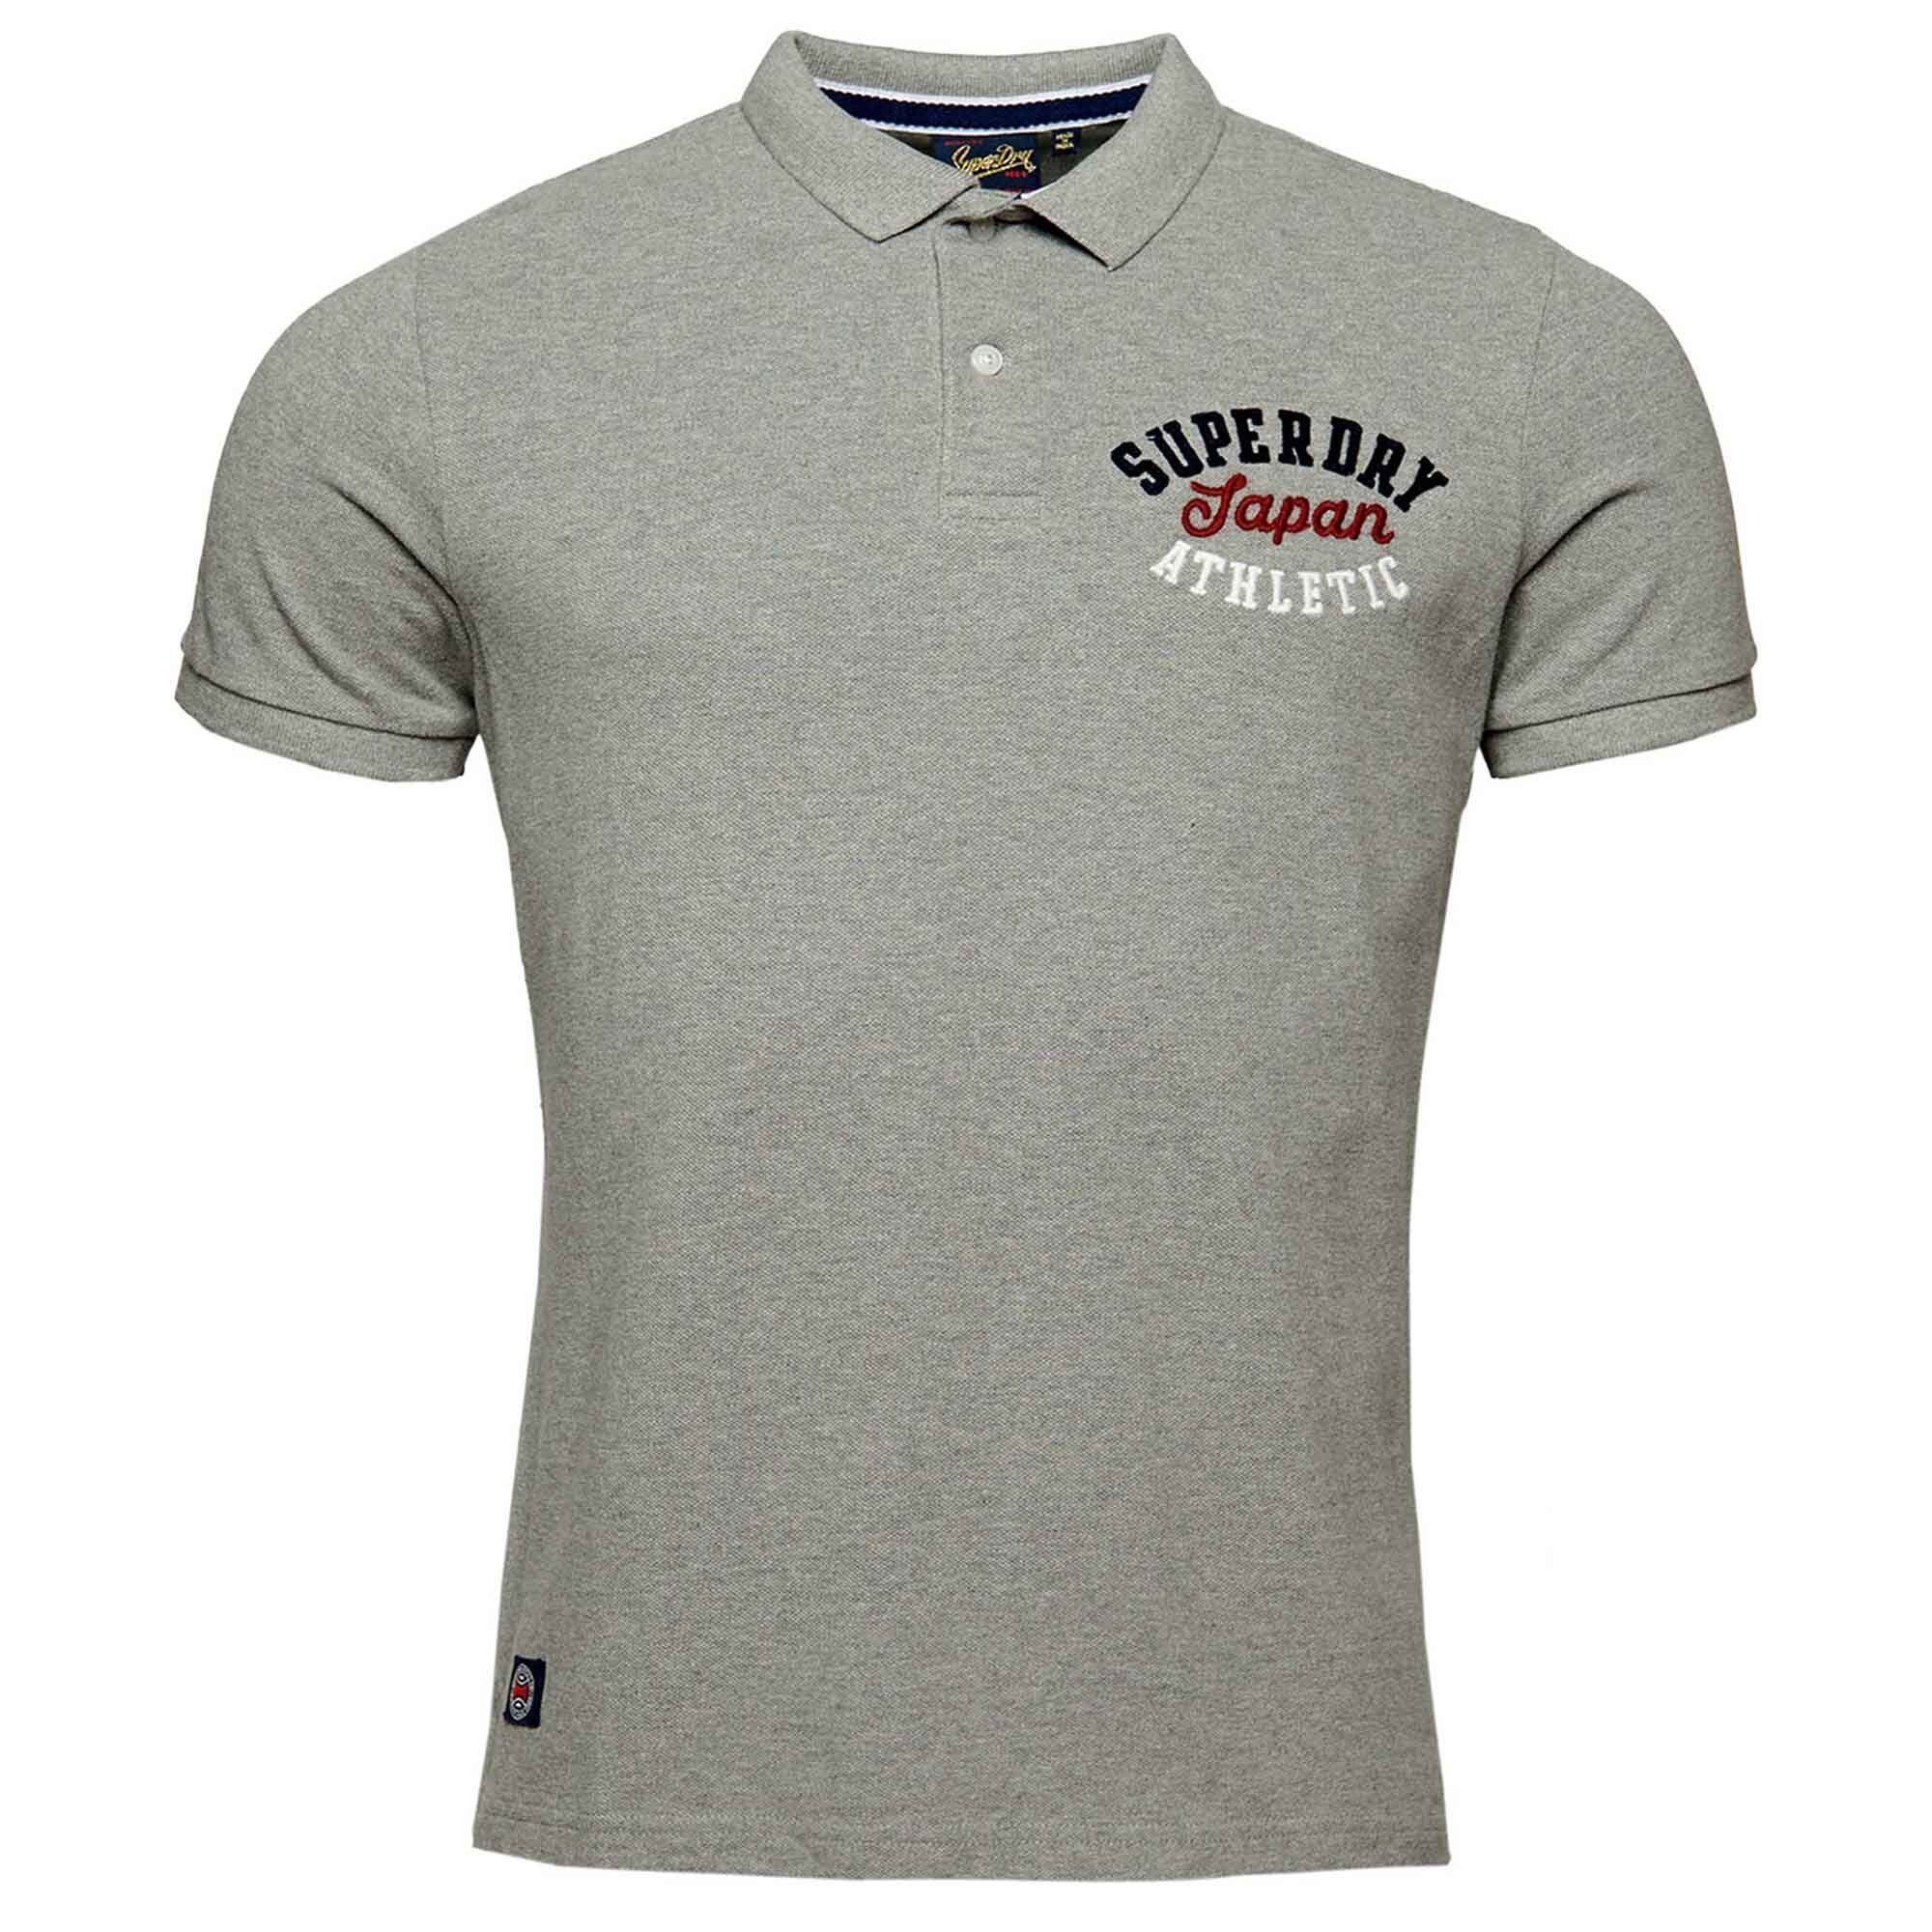 Superdry Poloshirt Herren Poloshirt - Vintage Superstate, Kurzarm Grau